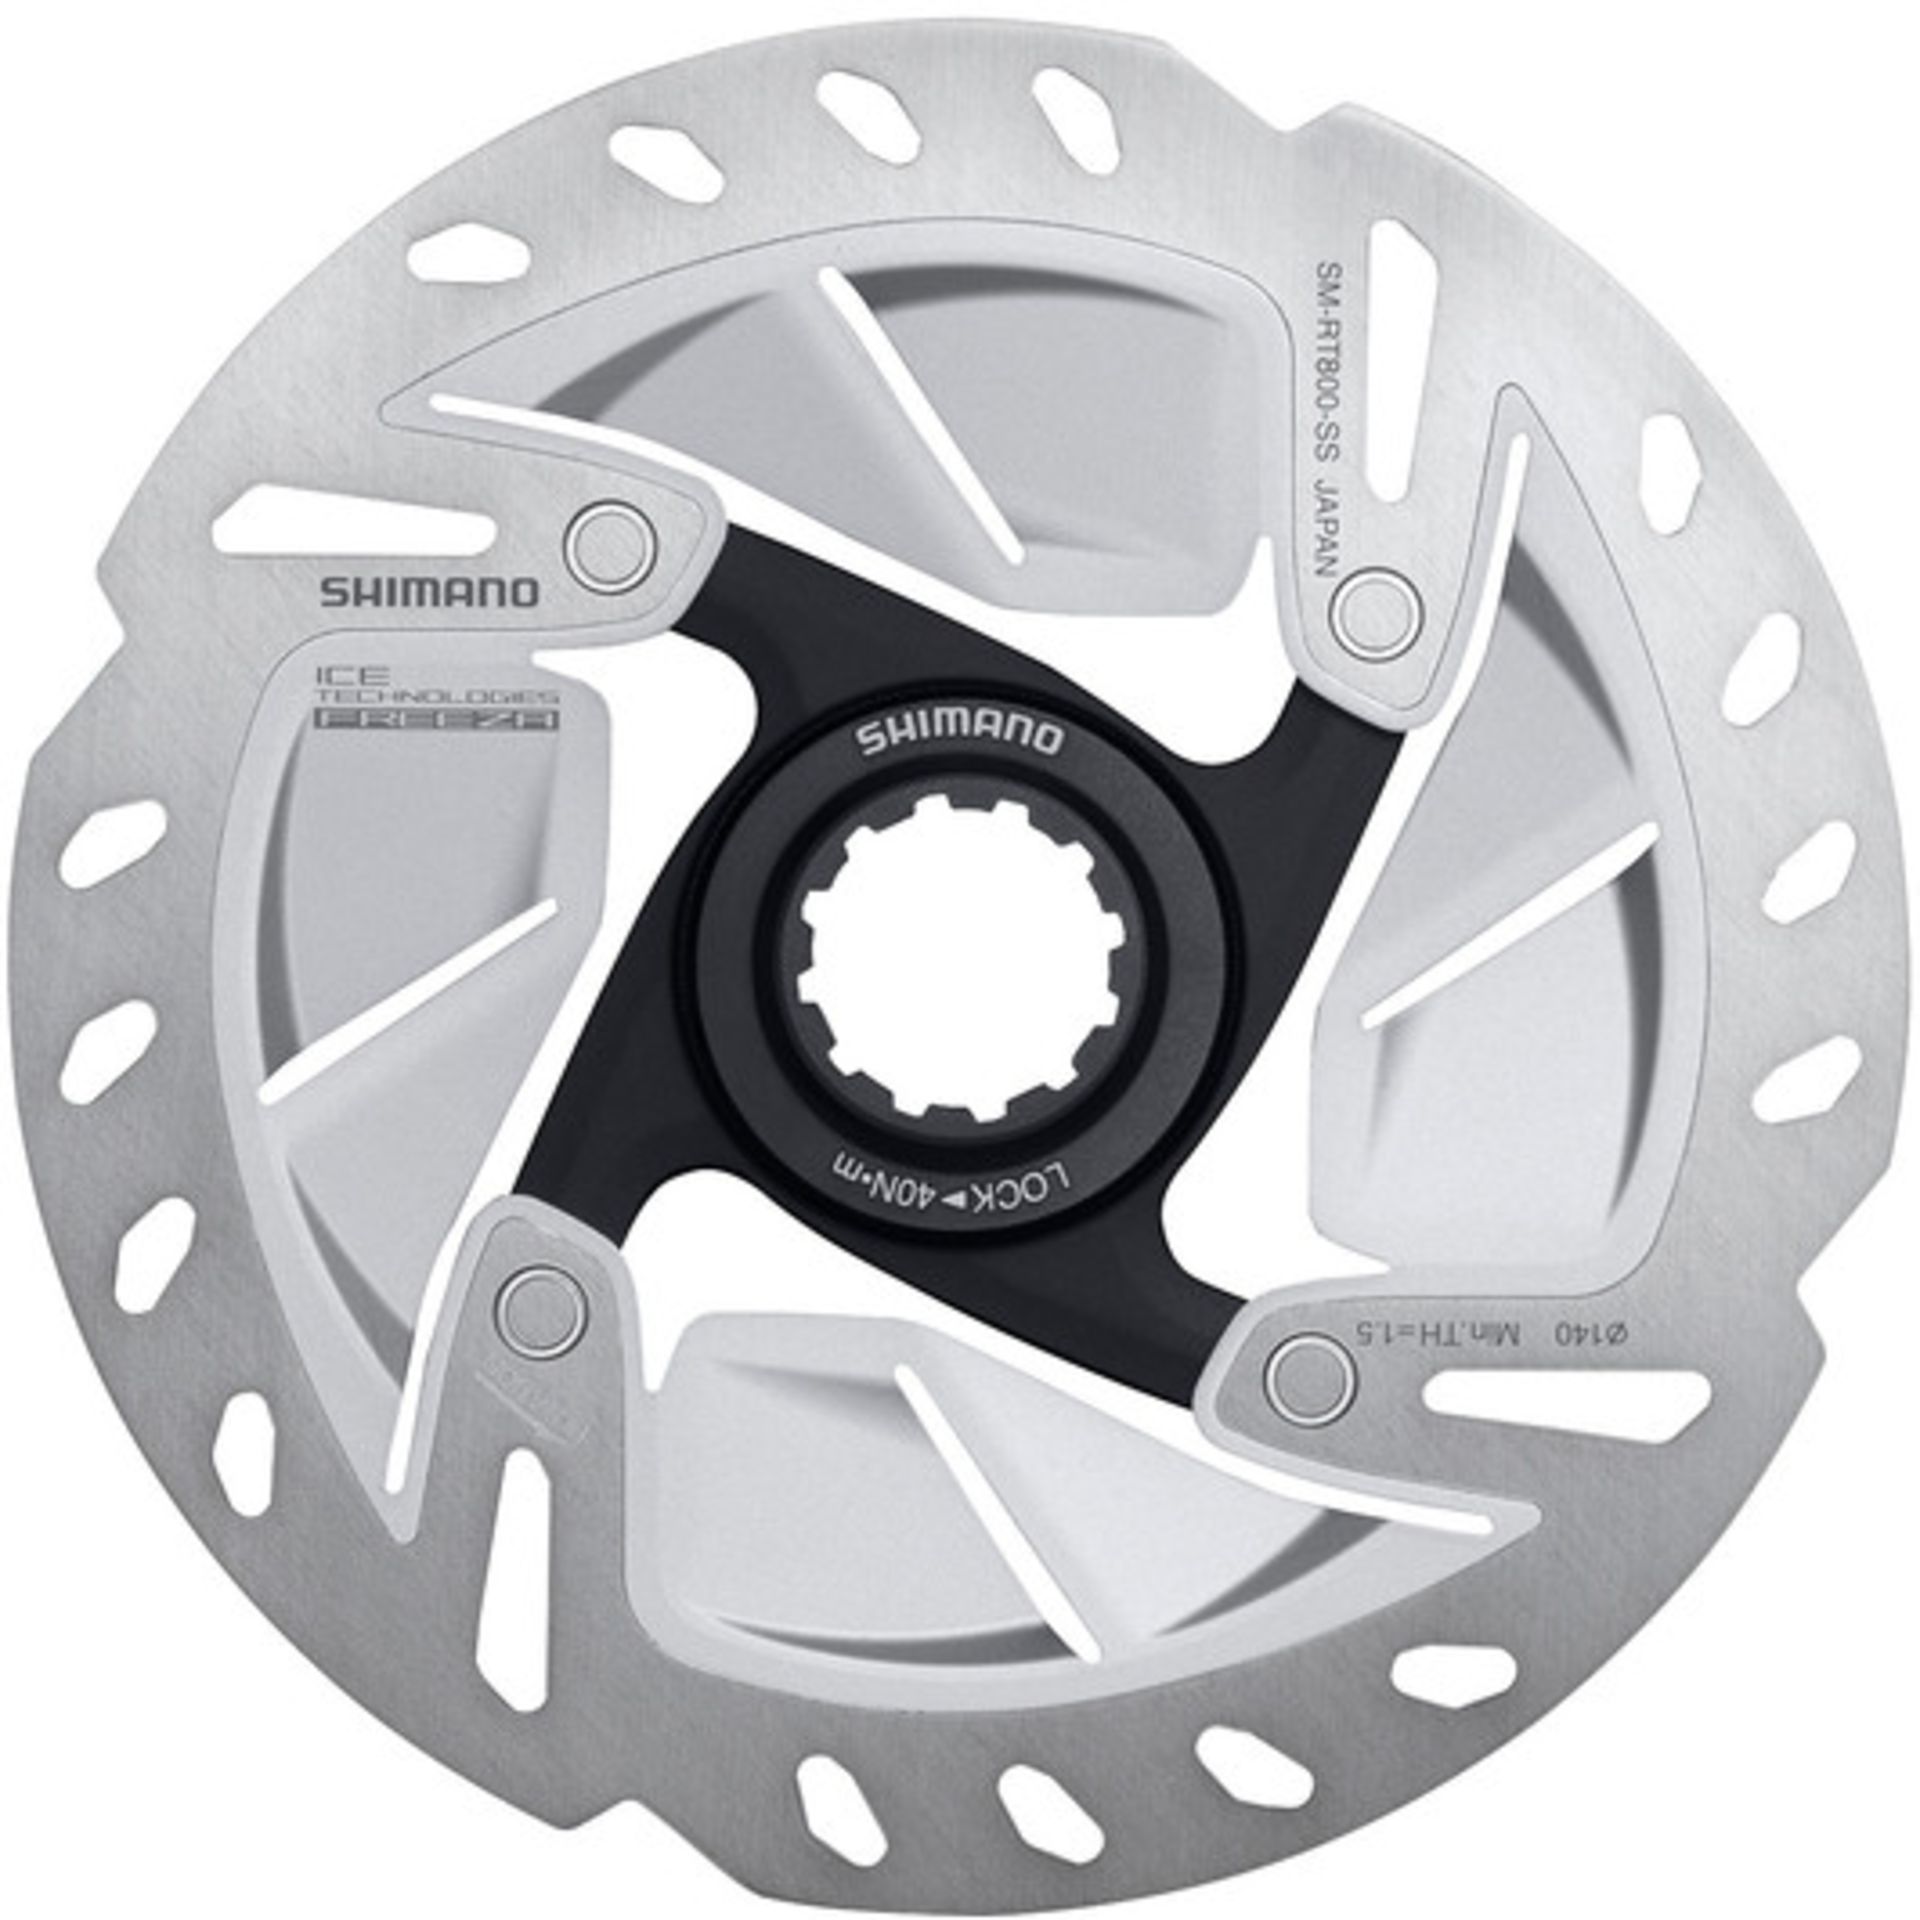 4 x Shimano Brake Discs & Rotors | See Description for Details - Image 4 of 4